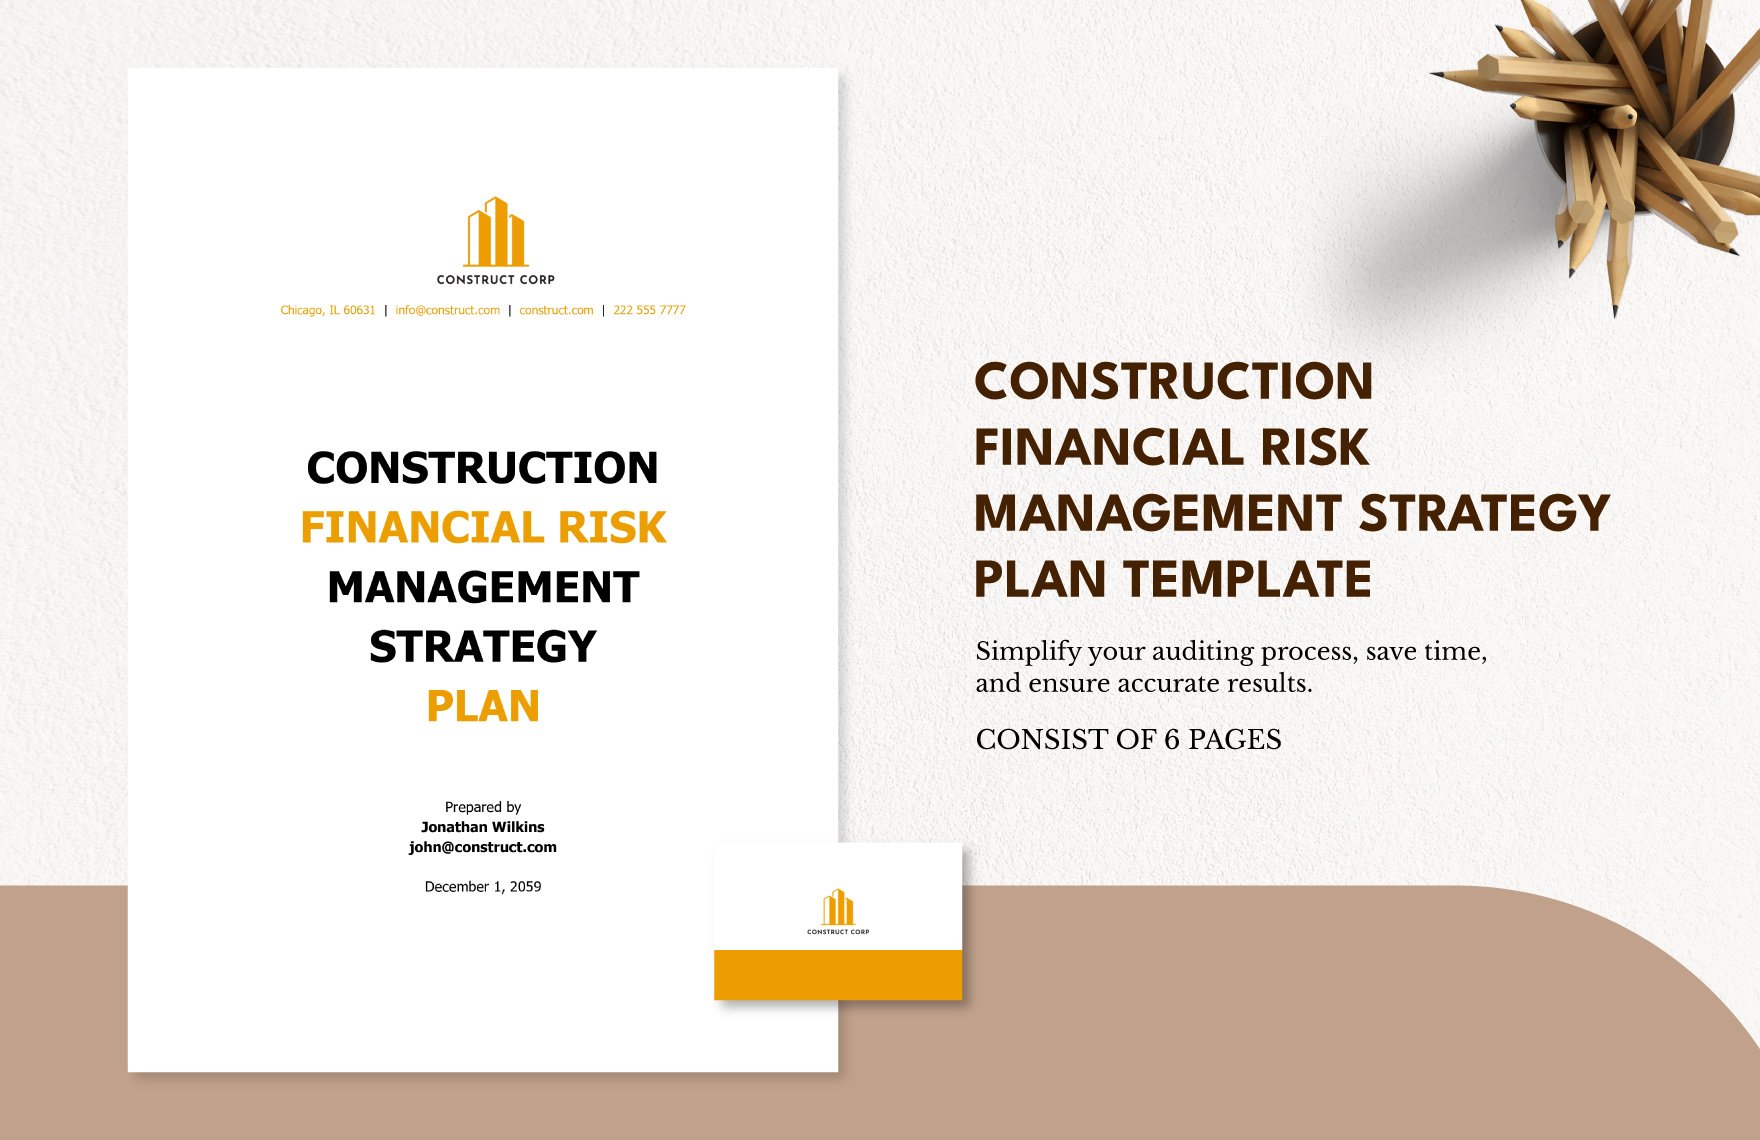 Construction Financial Risk Management Strategy Plan Template